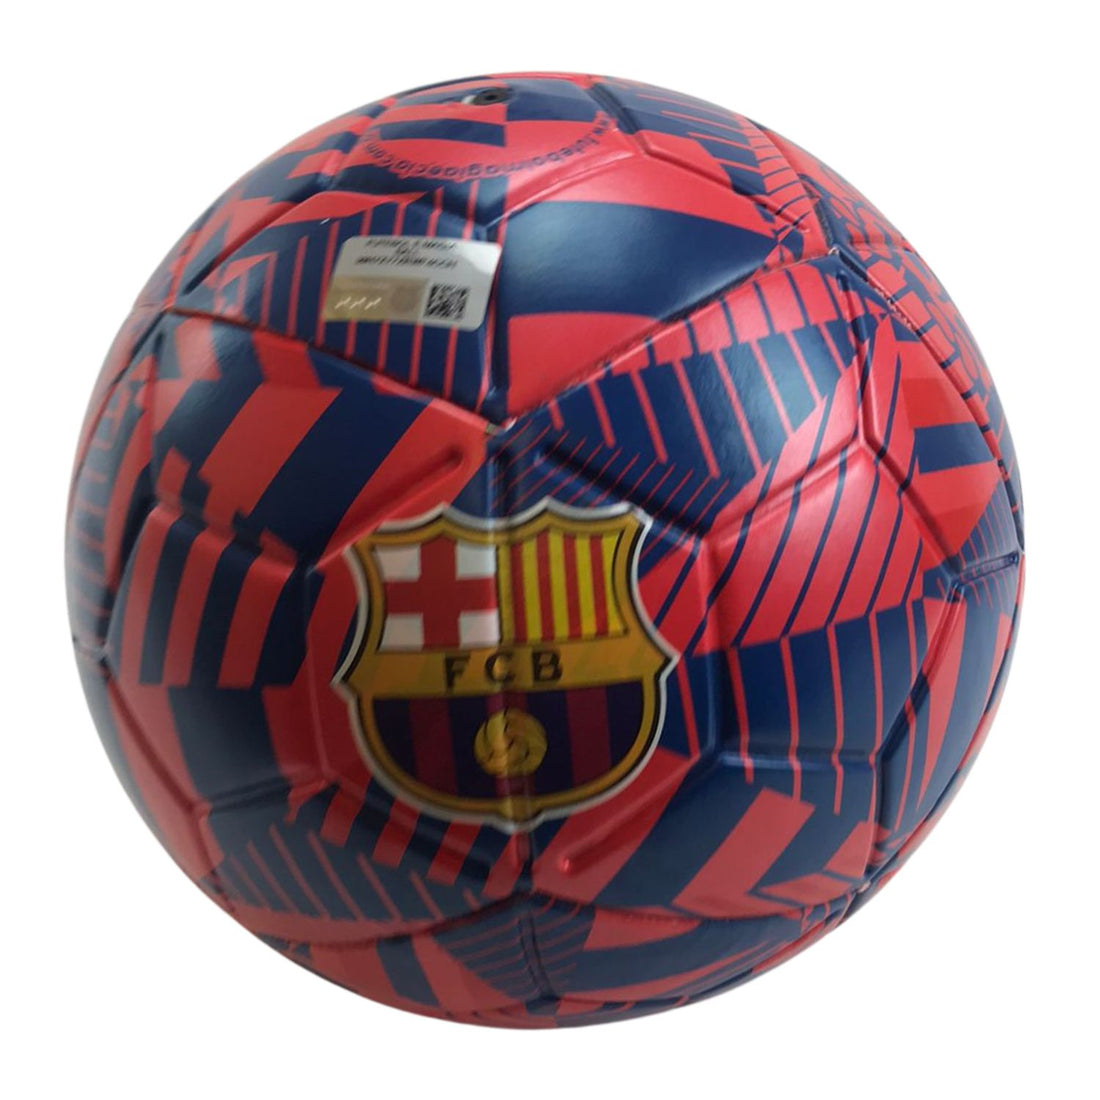 Bola Futebol N 5 Metalica do Barcelona - Futebol e Magia